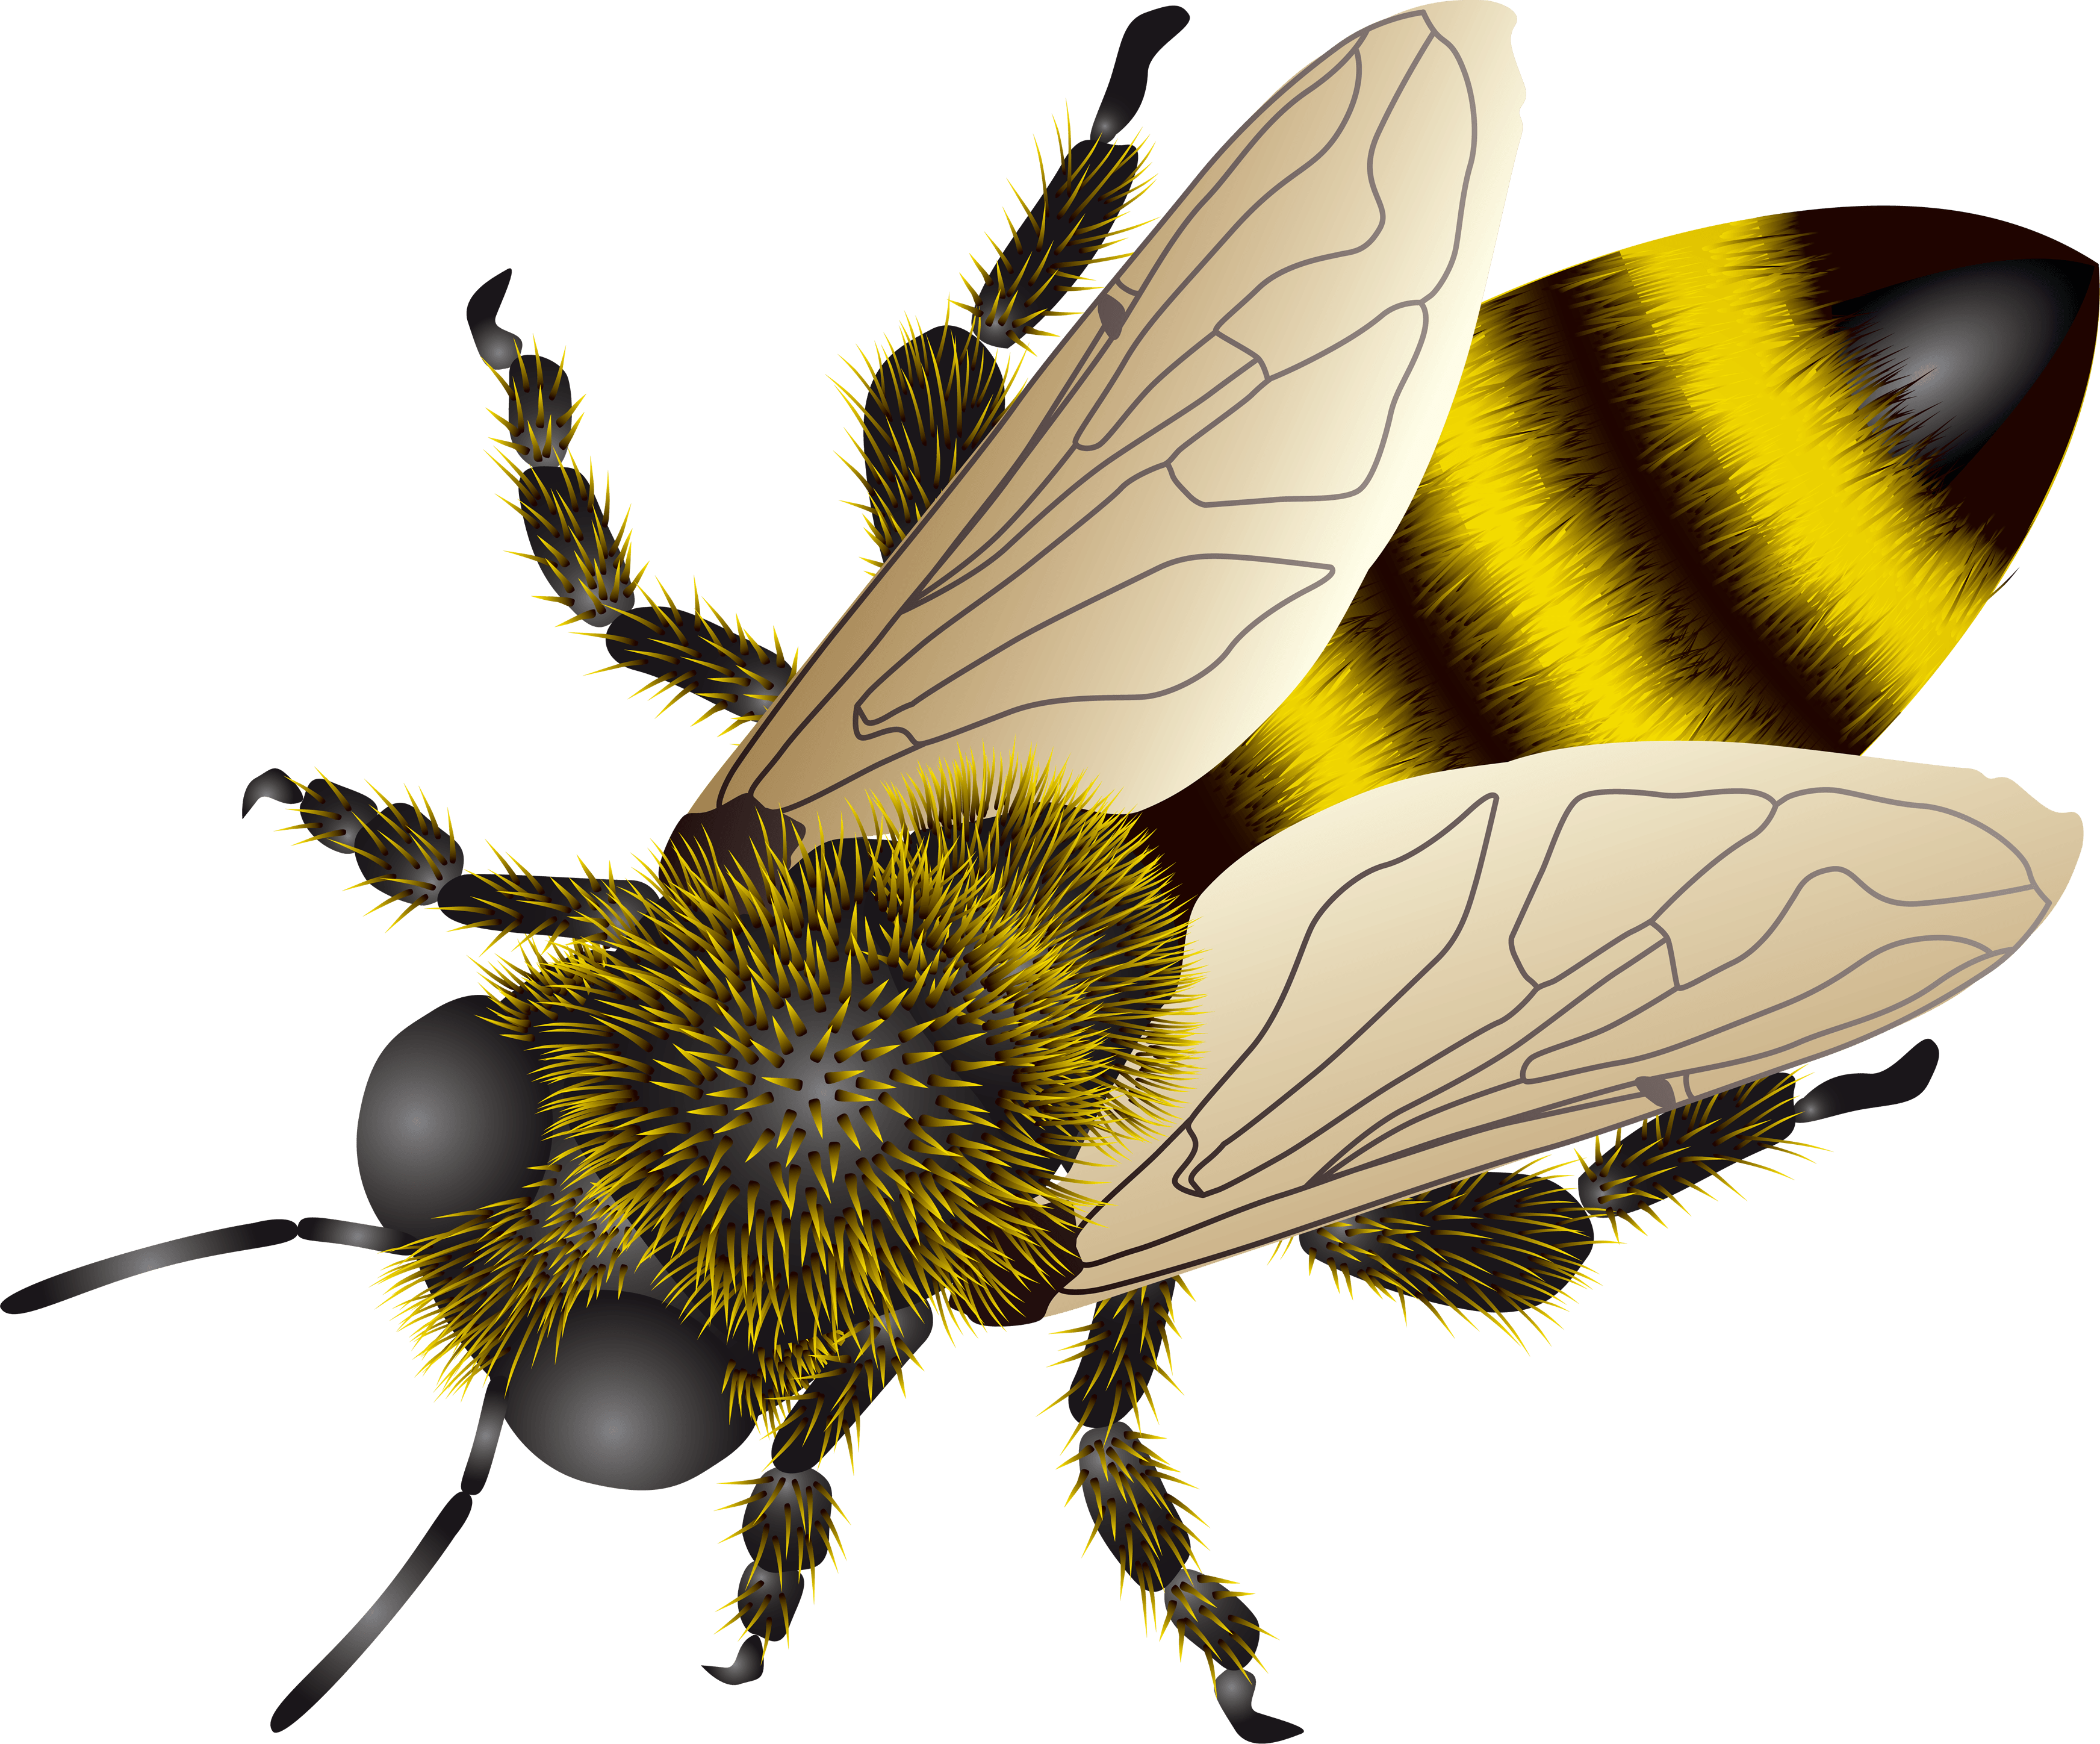 Animal Bee wallpaper (Desktop, Phone, Tablet)